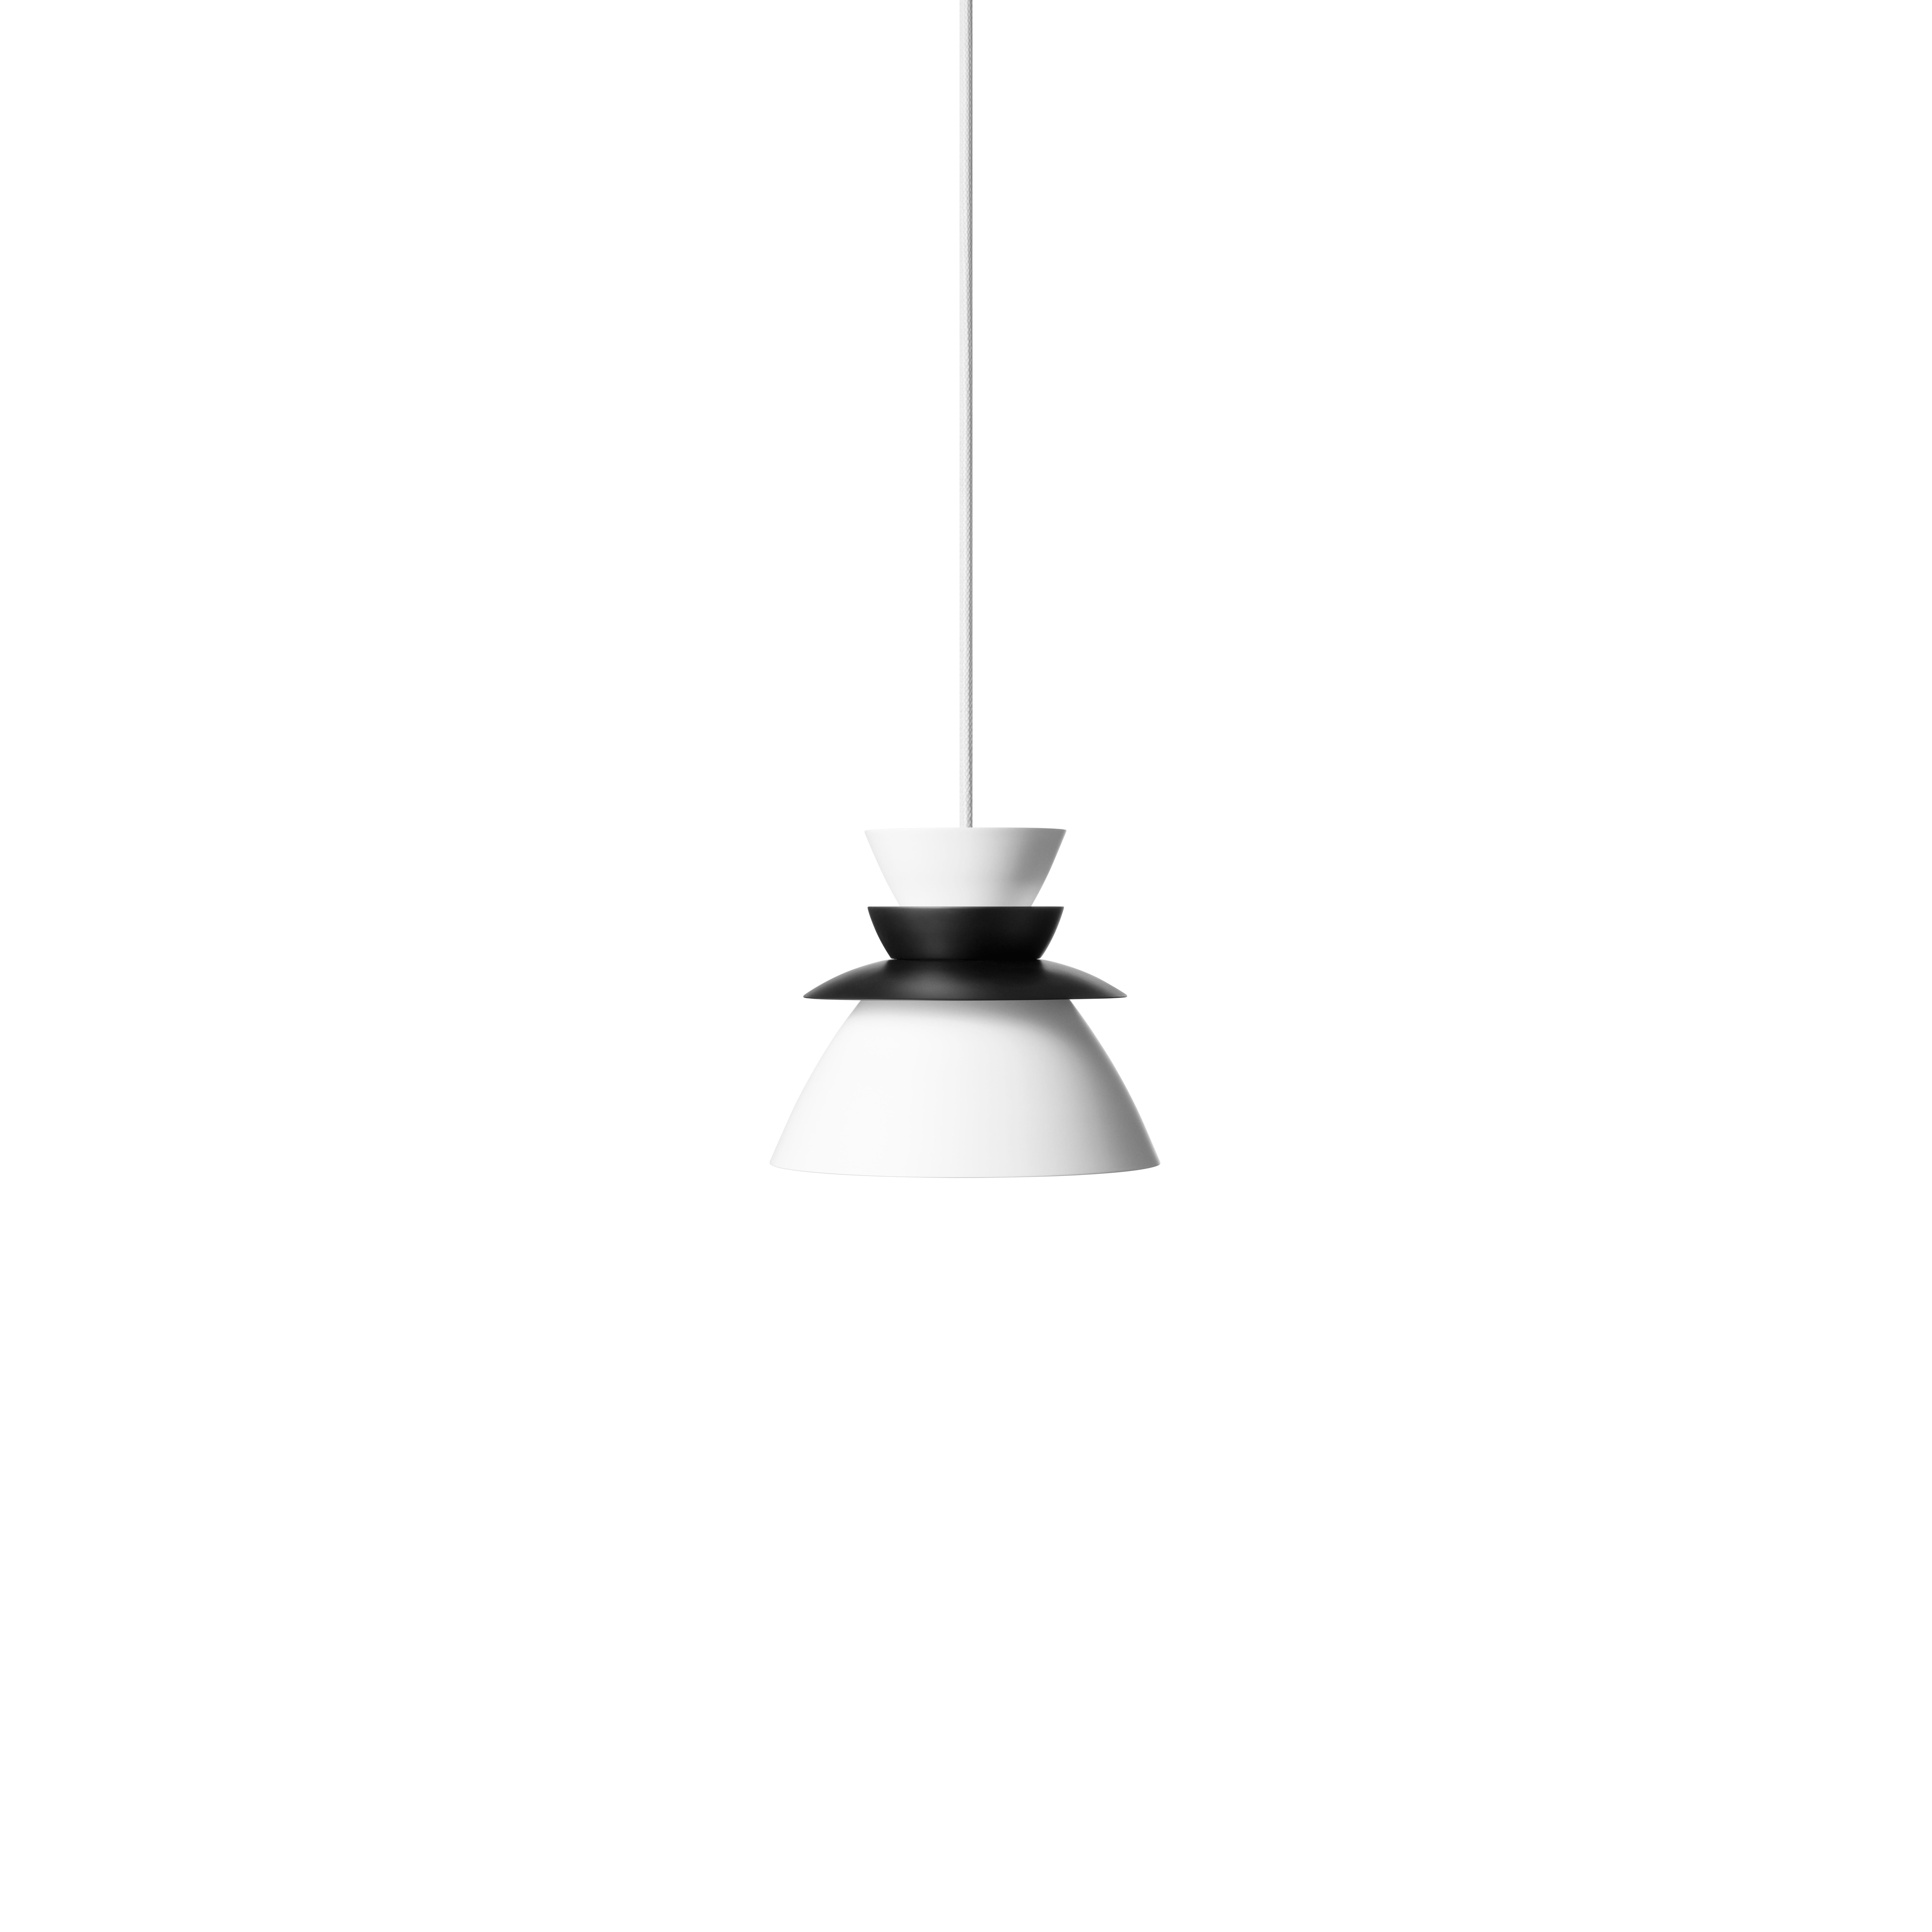 Sundowner, black pendant lamp by Jørn Utzon, LYFA.

Size : H 15,1 x Ø 17,5 cm (3m white textile cord)
Materials : Matt painted steel

Light source (not included)
Socket: G9
Max wattage: 40 Watt
Energy class: The luminaire is compatible with